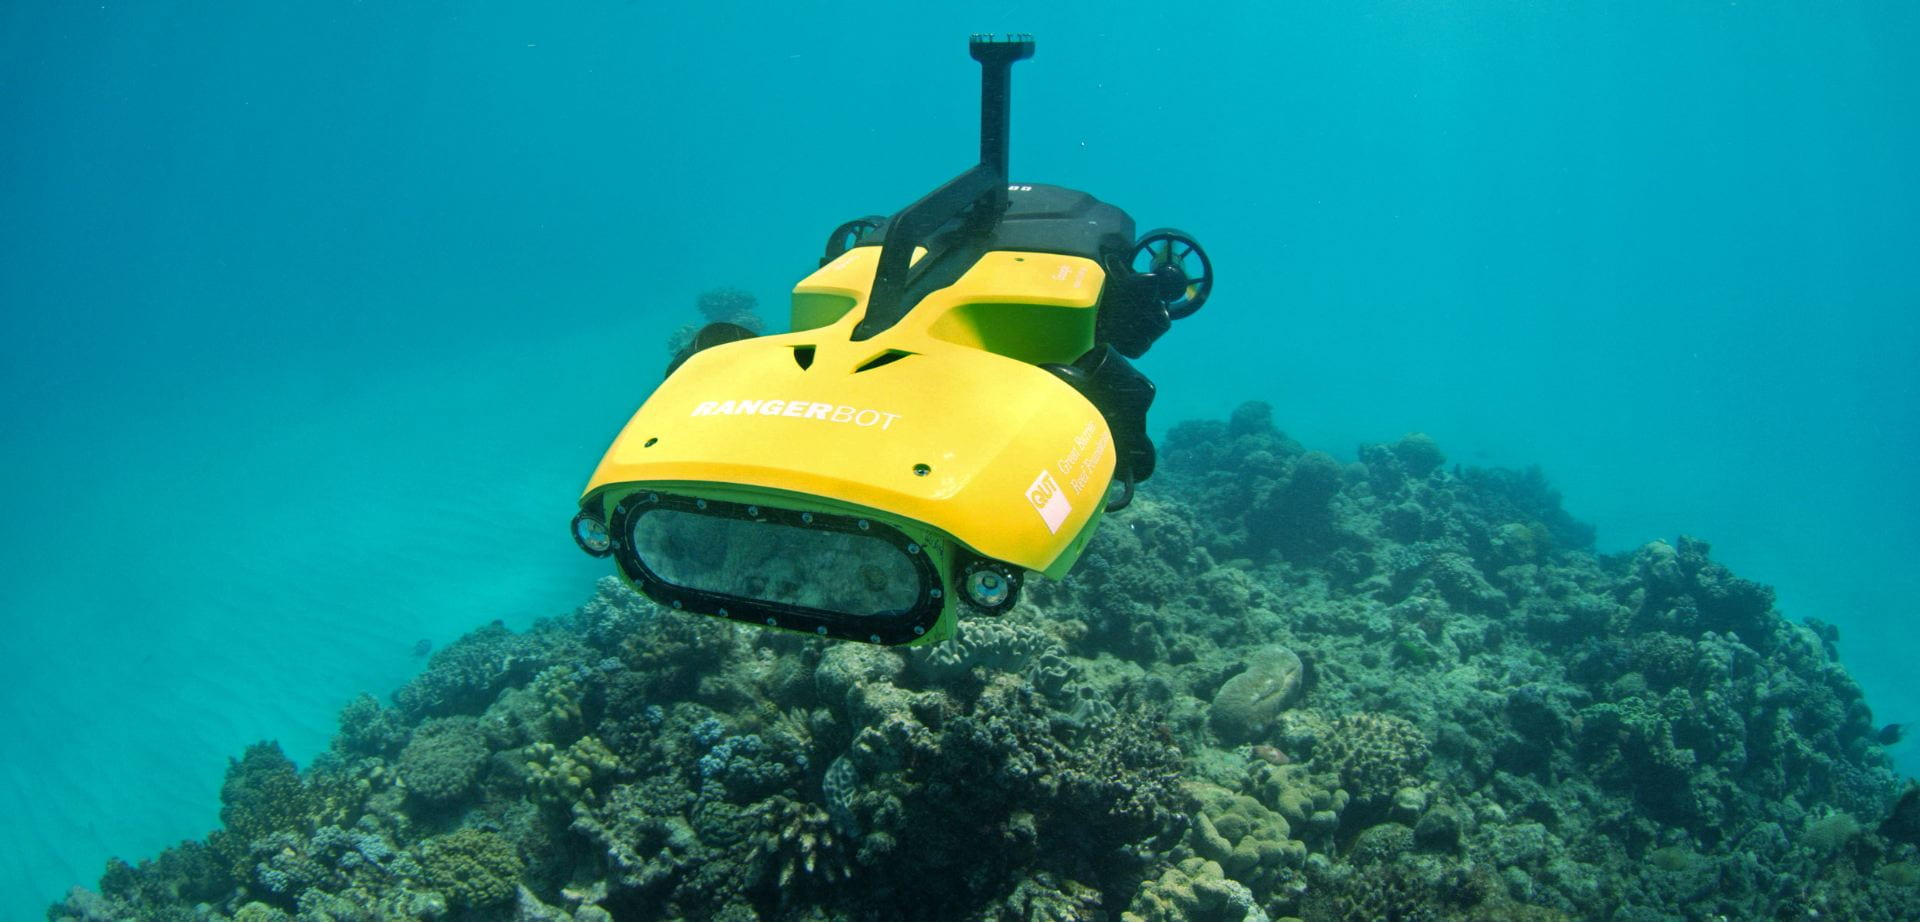 A yellow submersible autonomous vehicle navigates above a coral reef.